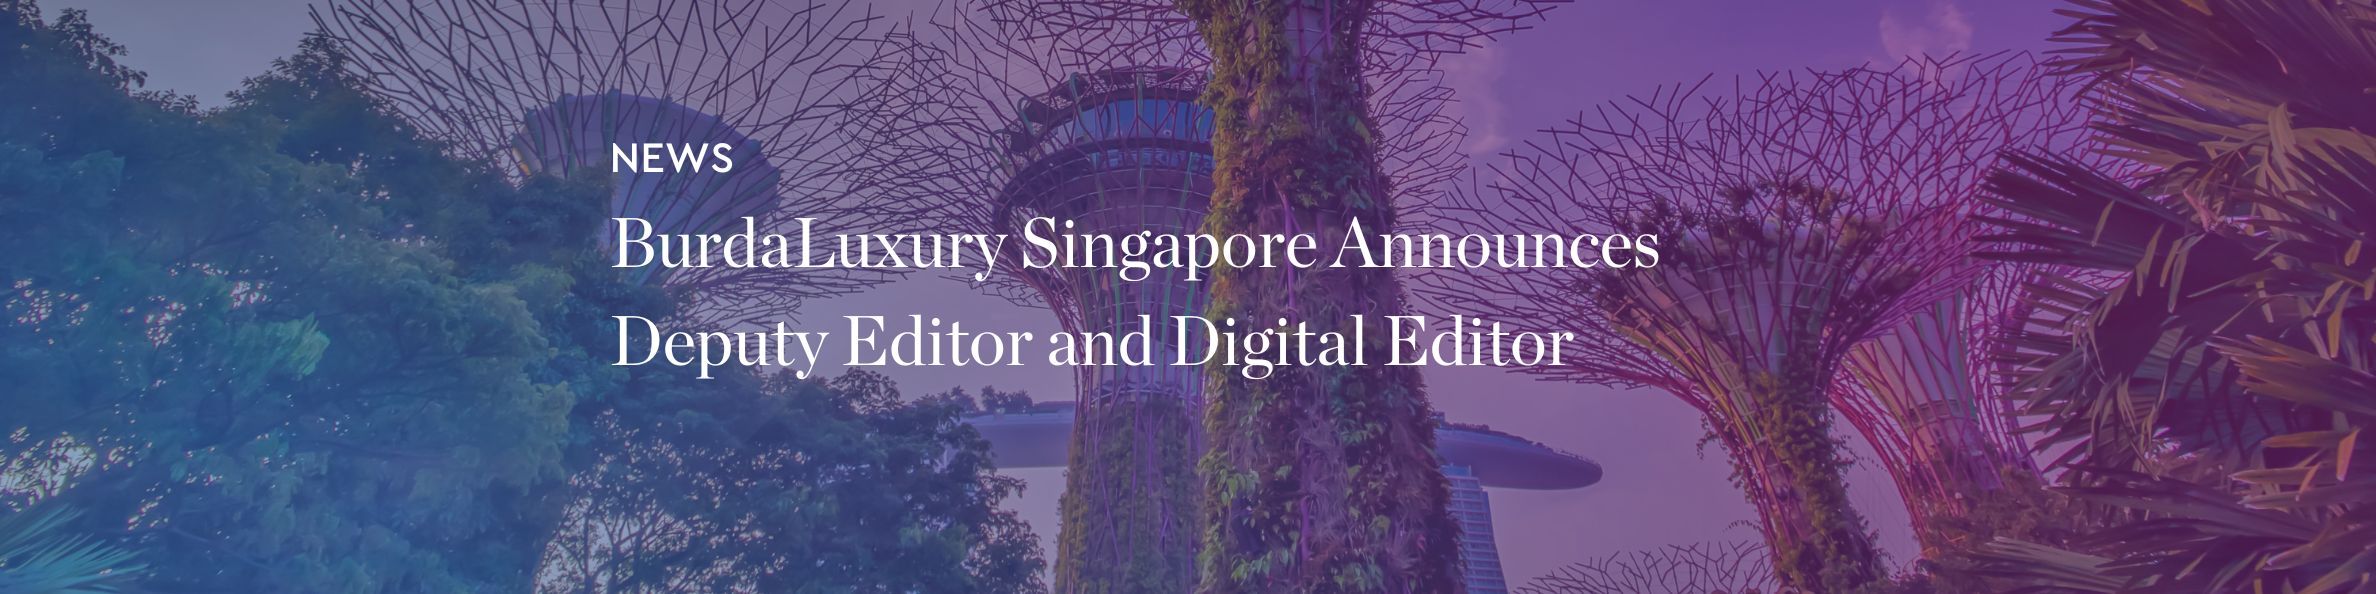 BurdaLuxury Singapore Announces Deputy Editor and Digital Editor